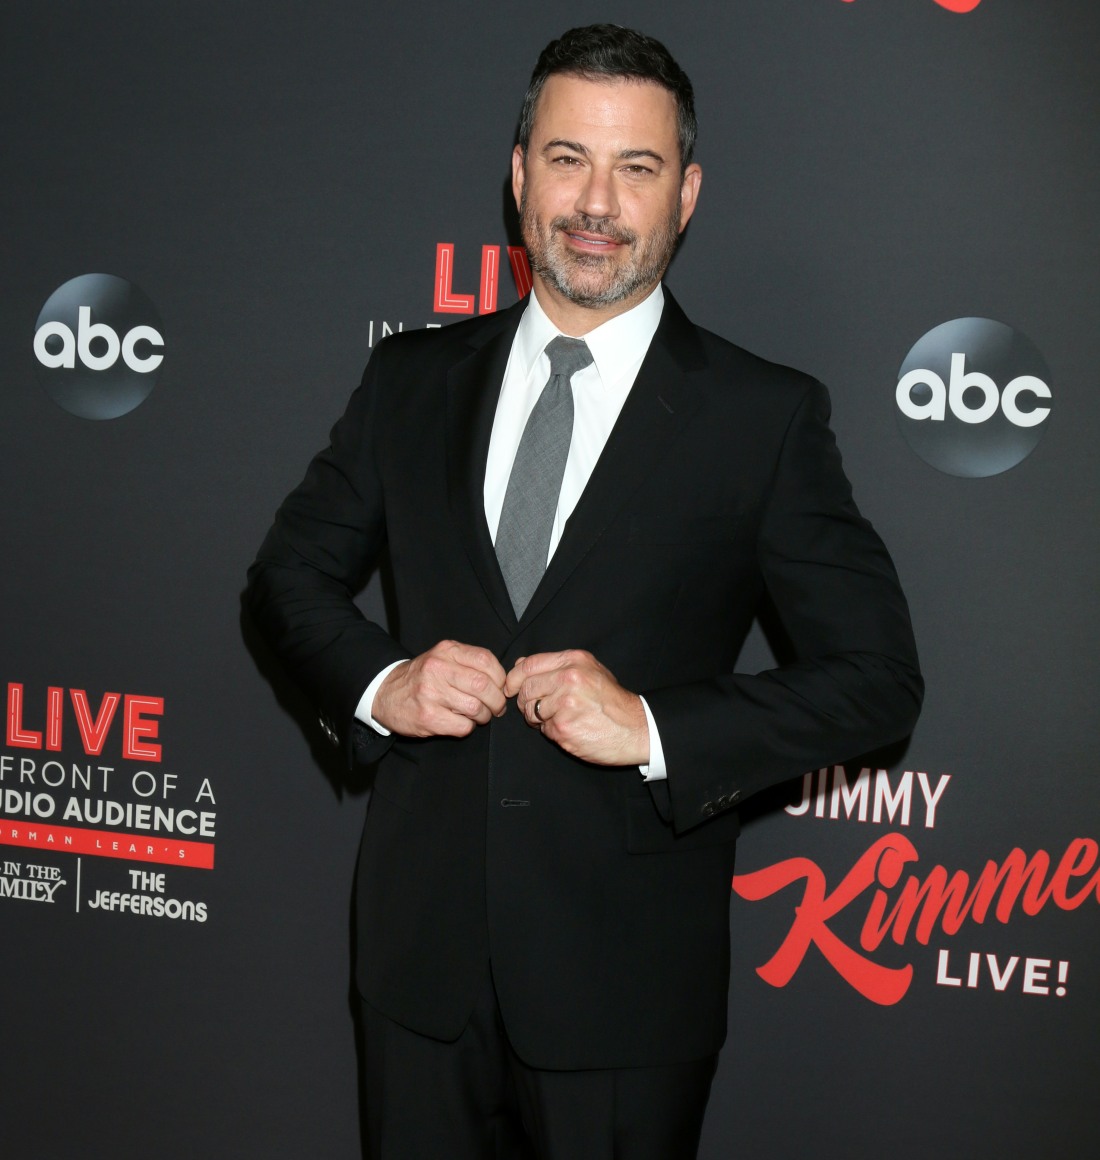 An Evening With Jimmy Kimmel